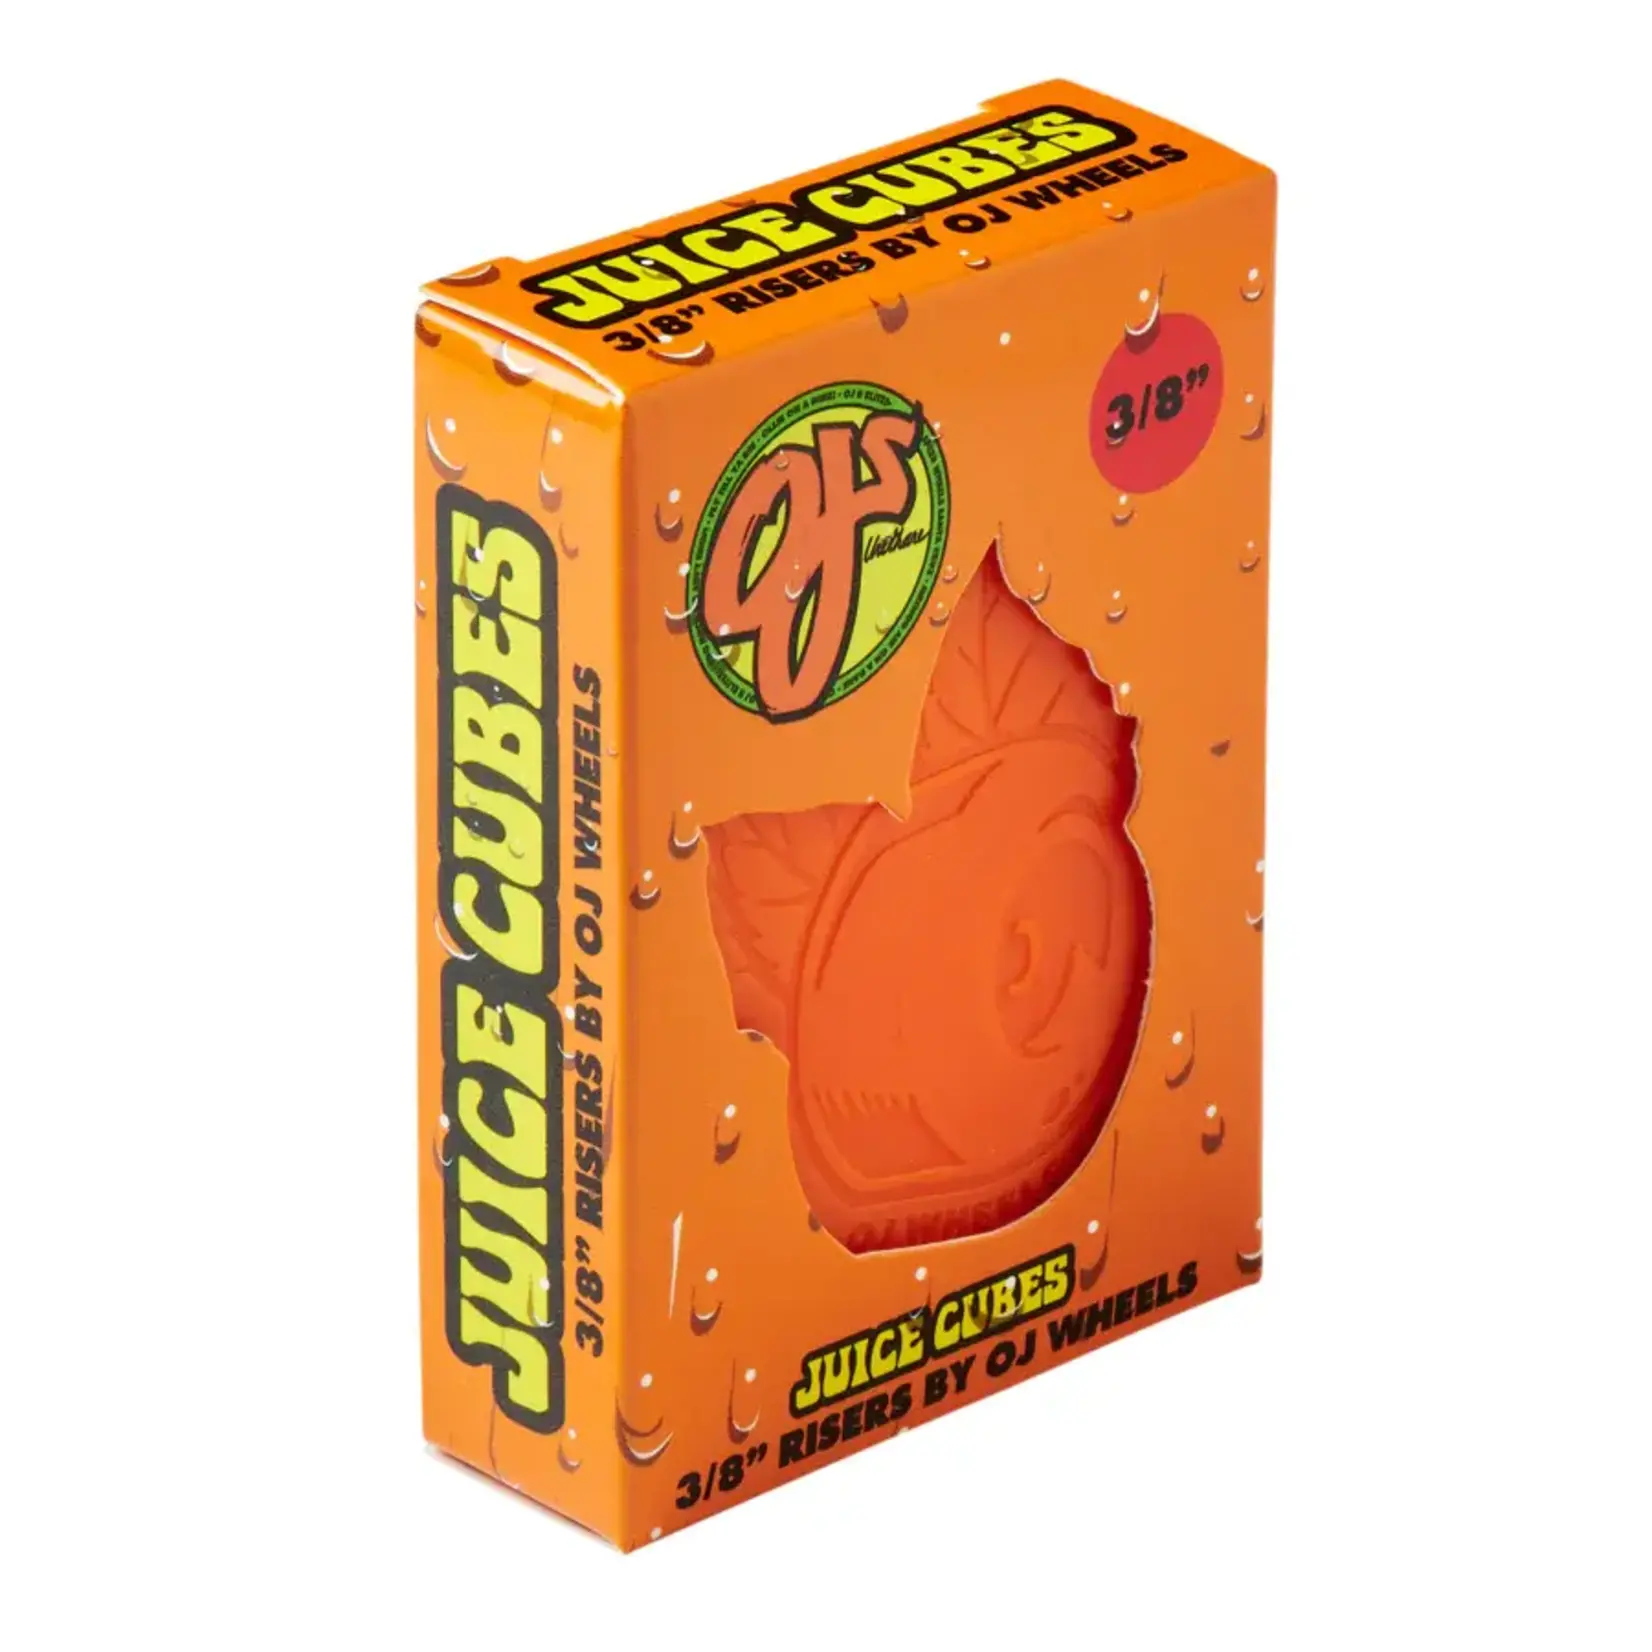 OJ Juice Cubes 3/8" Risers Orange